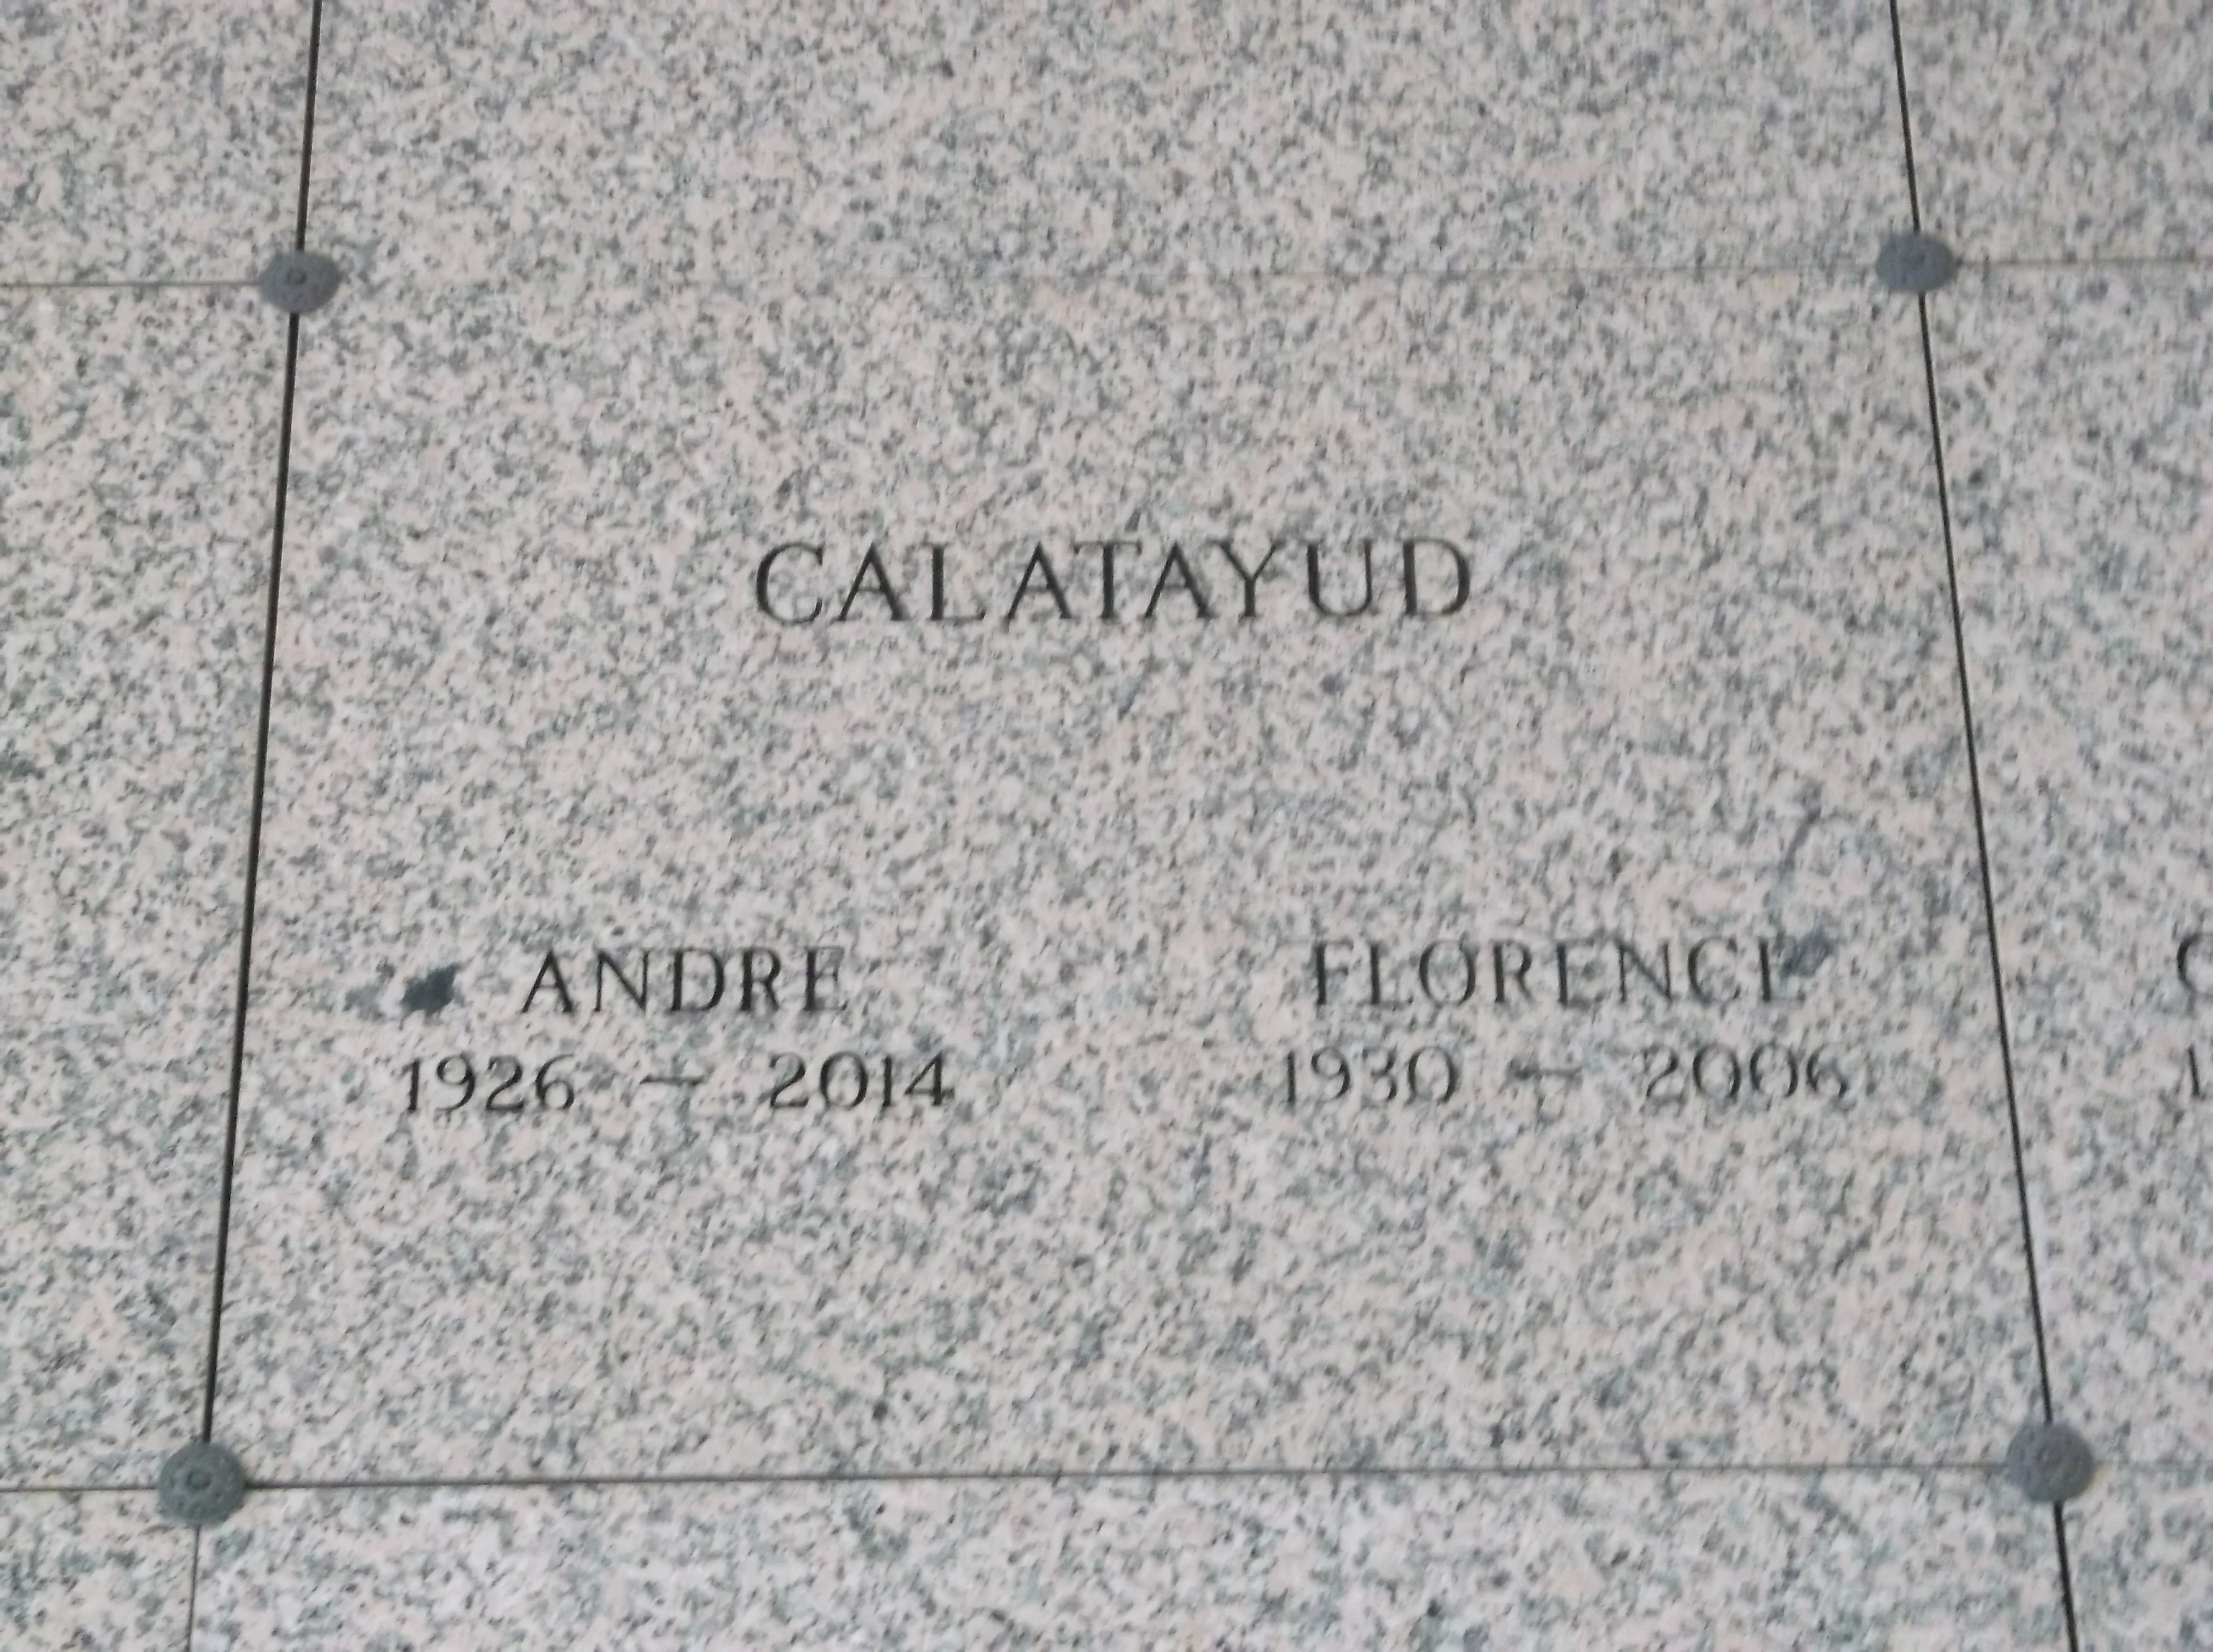 Andre Calatayud